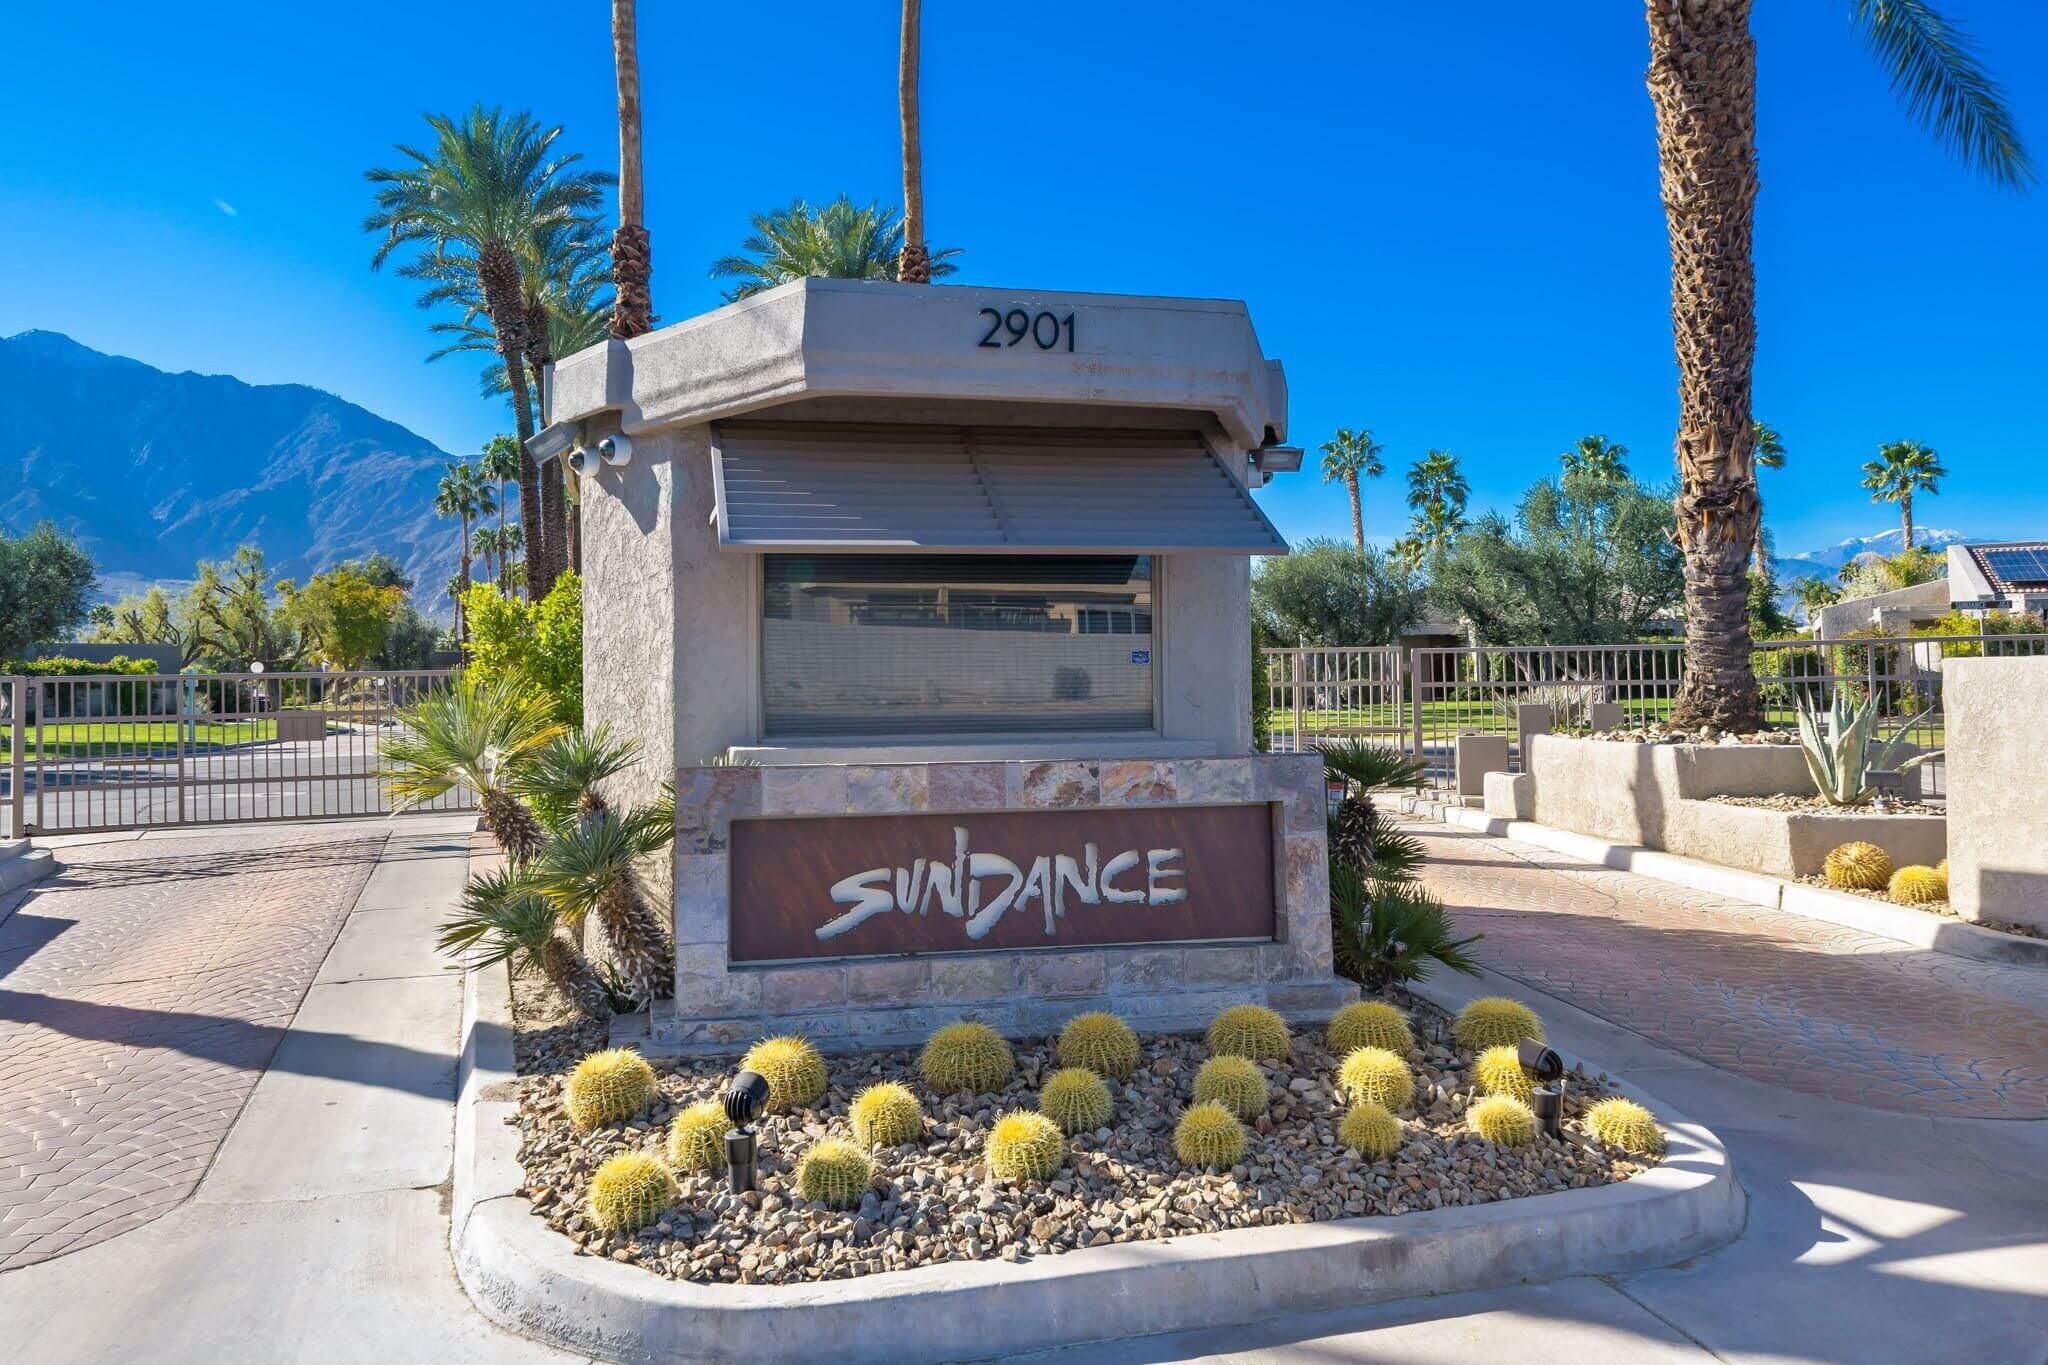 Sundance Resort Community